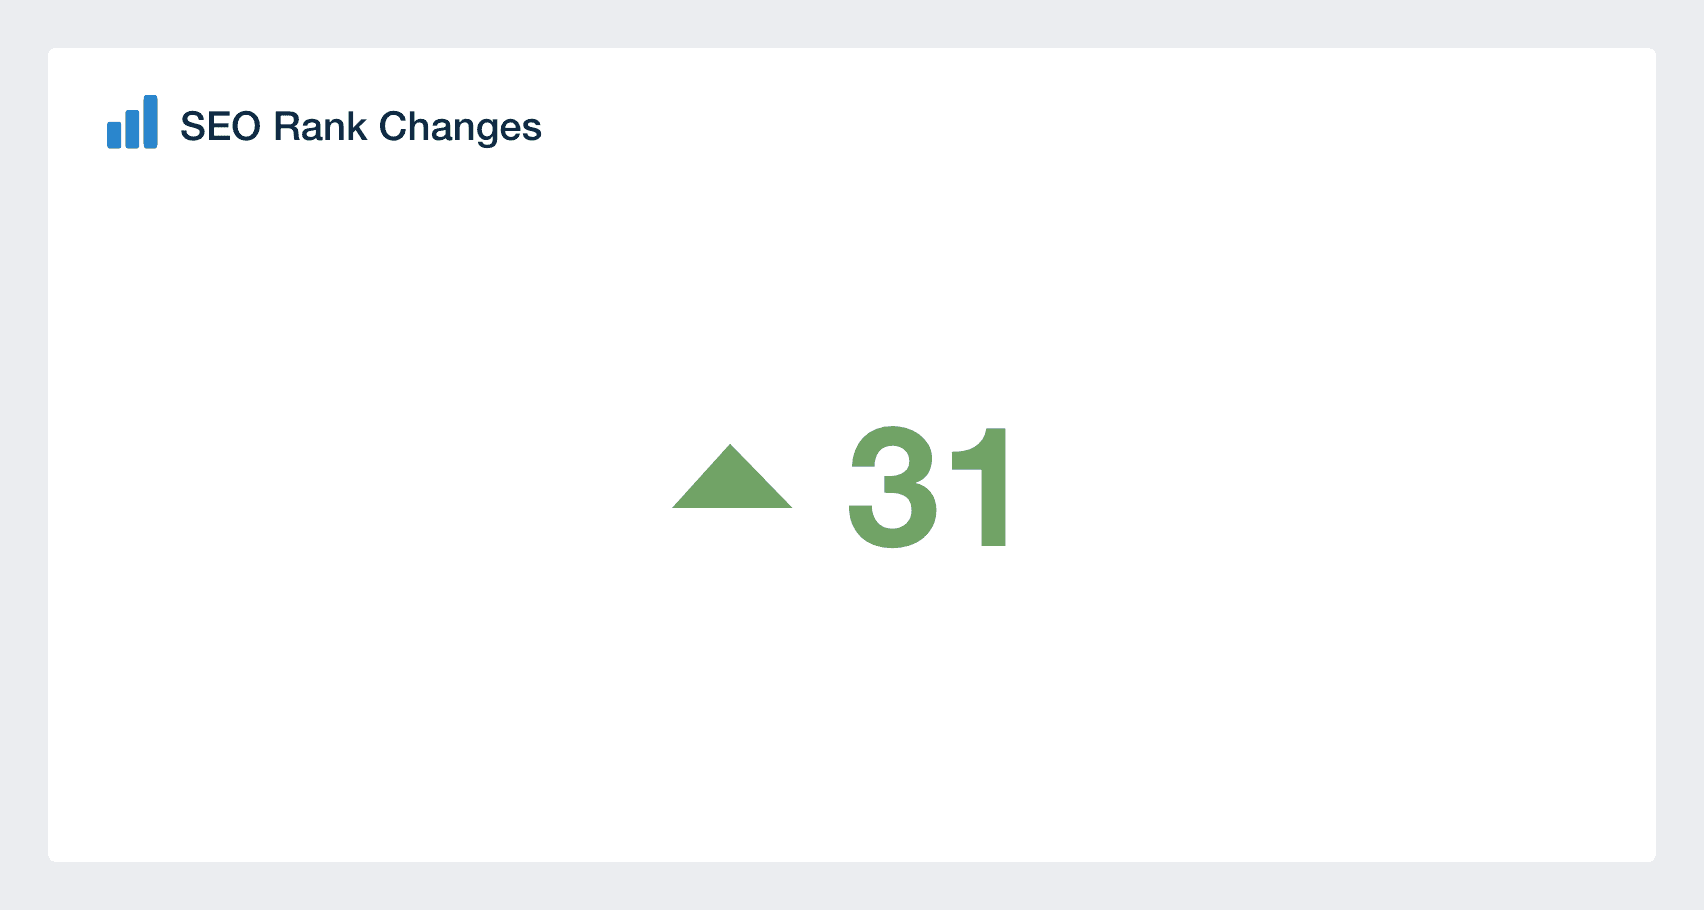 seo rank changes metric marketing dashboard template